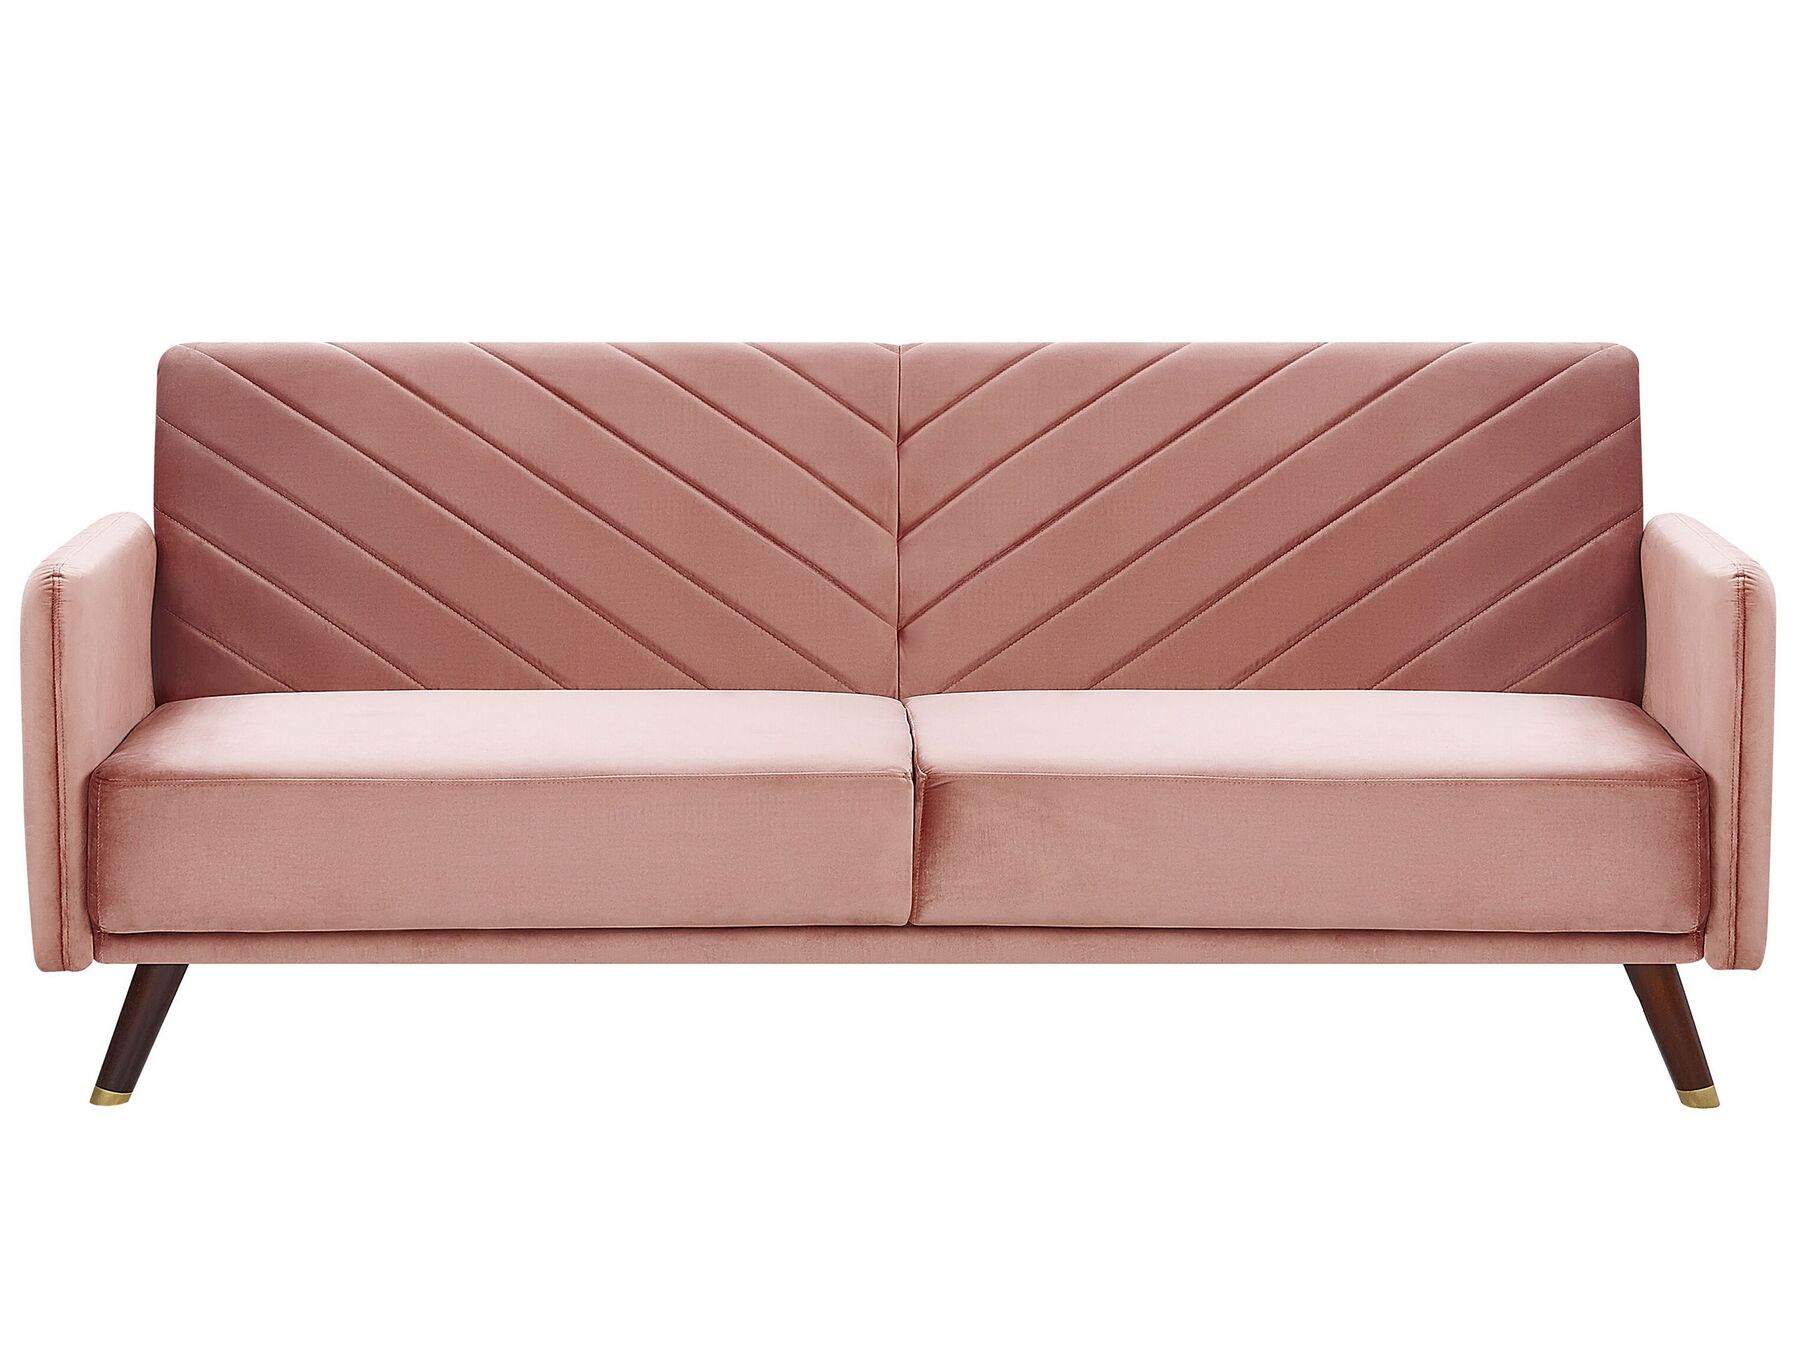 Retro Velvet Fabric Sofa Bed 3 Seater Pink Convertible Reclining Senja